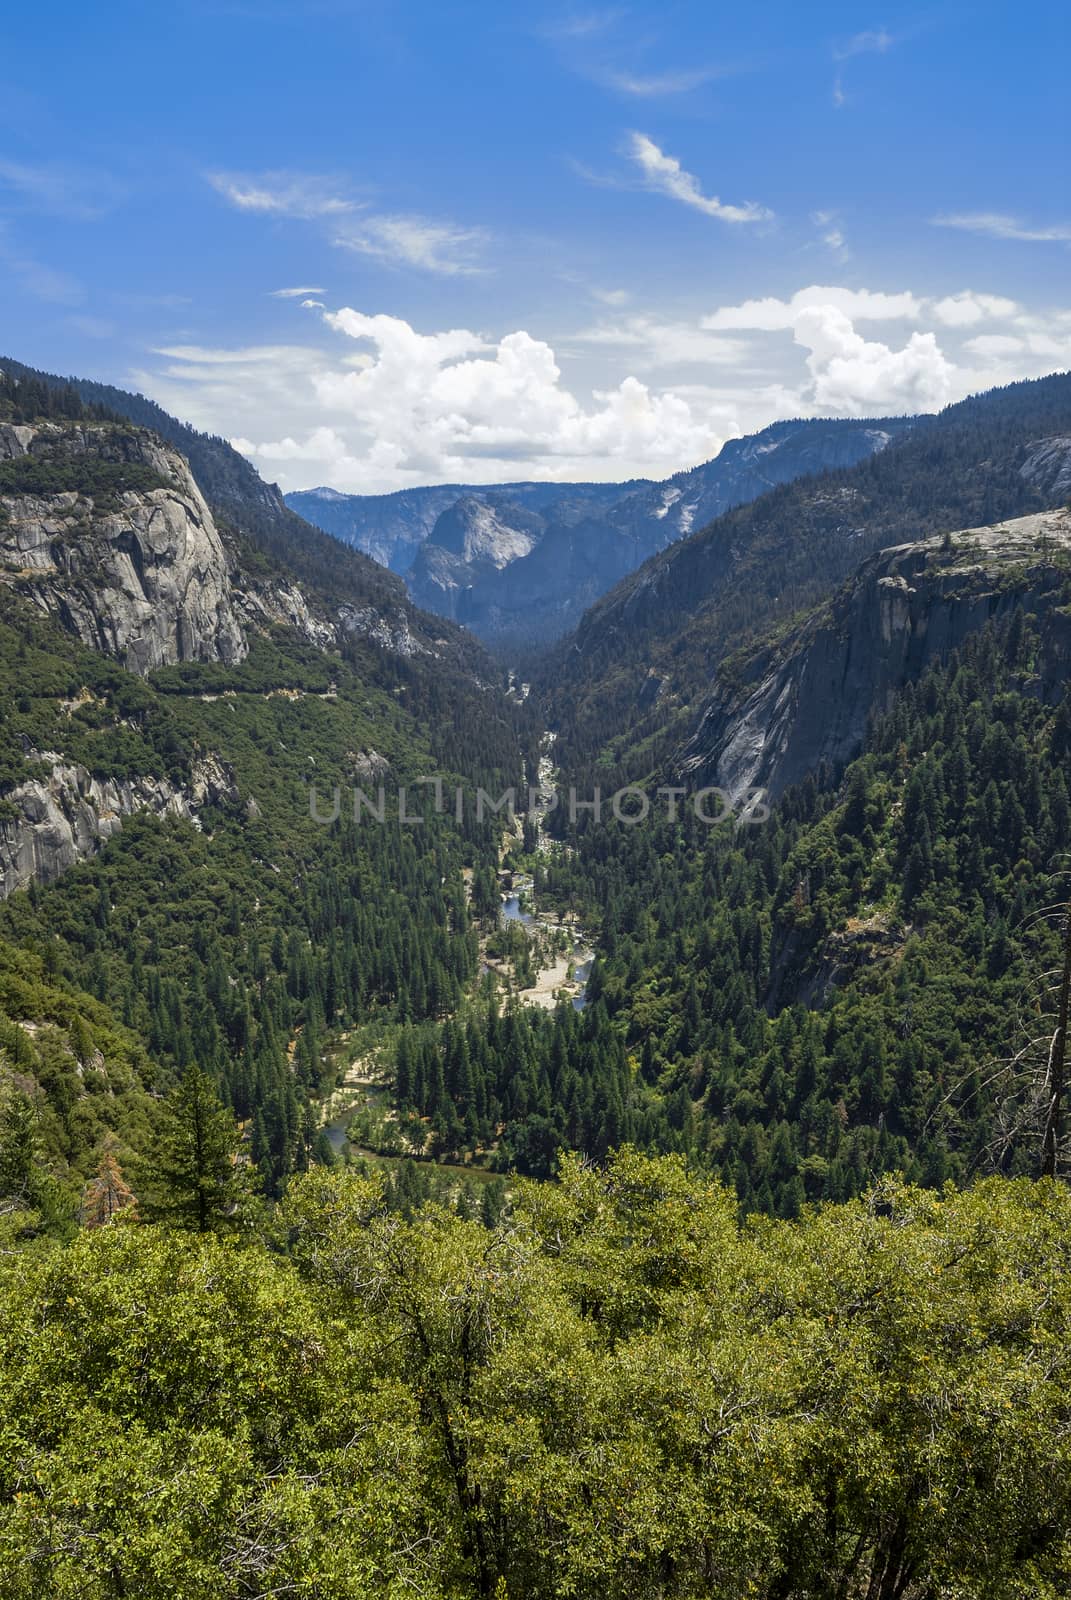 On the Way to Yosemite by whitechild